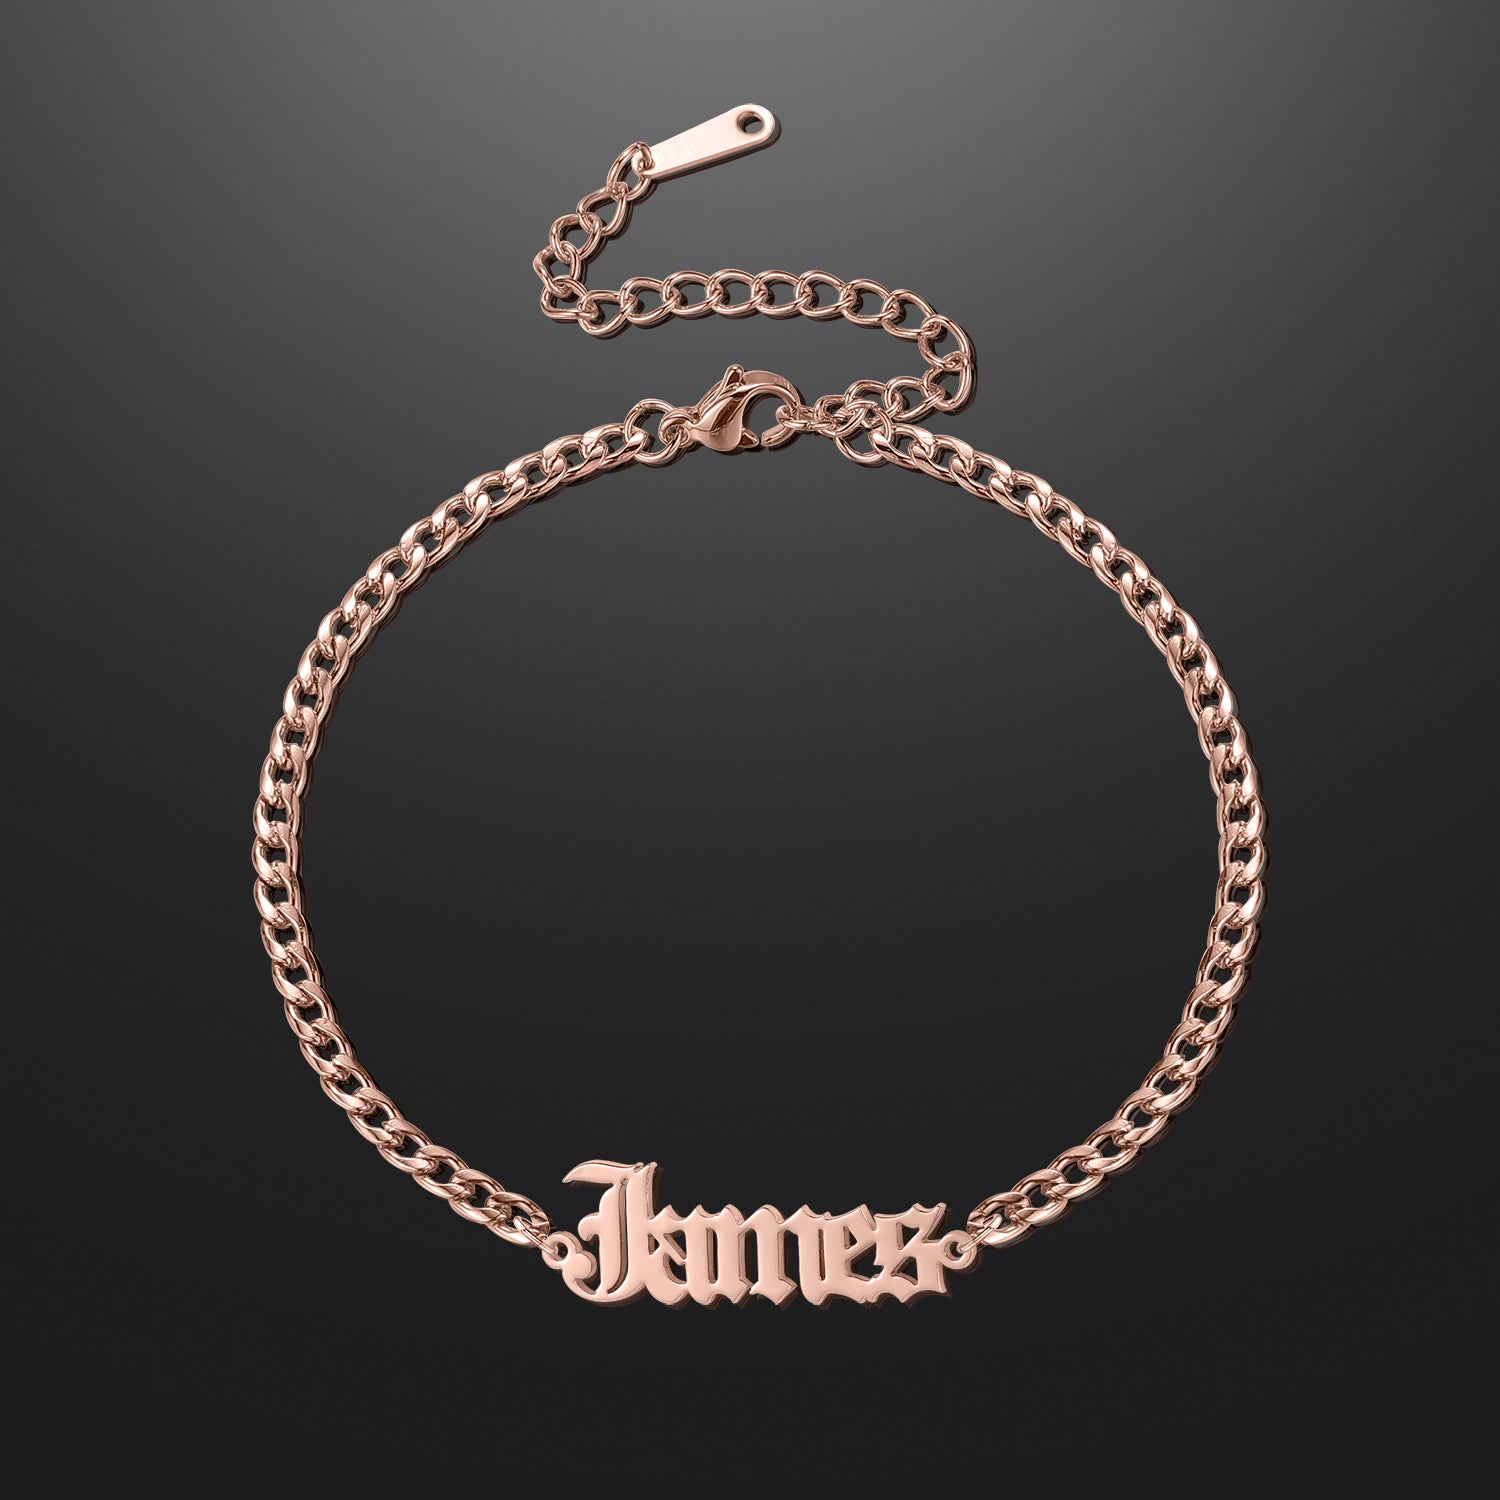 Gothic Name Bracelet w/ Cuban Chain